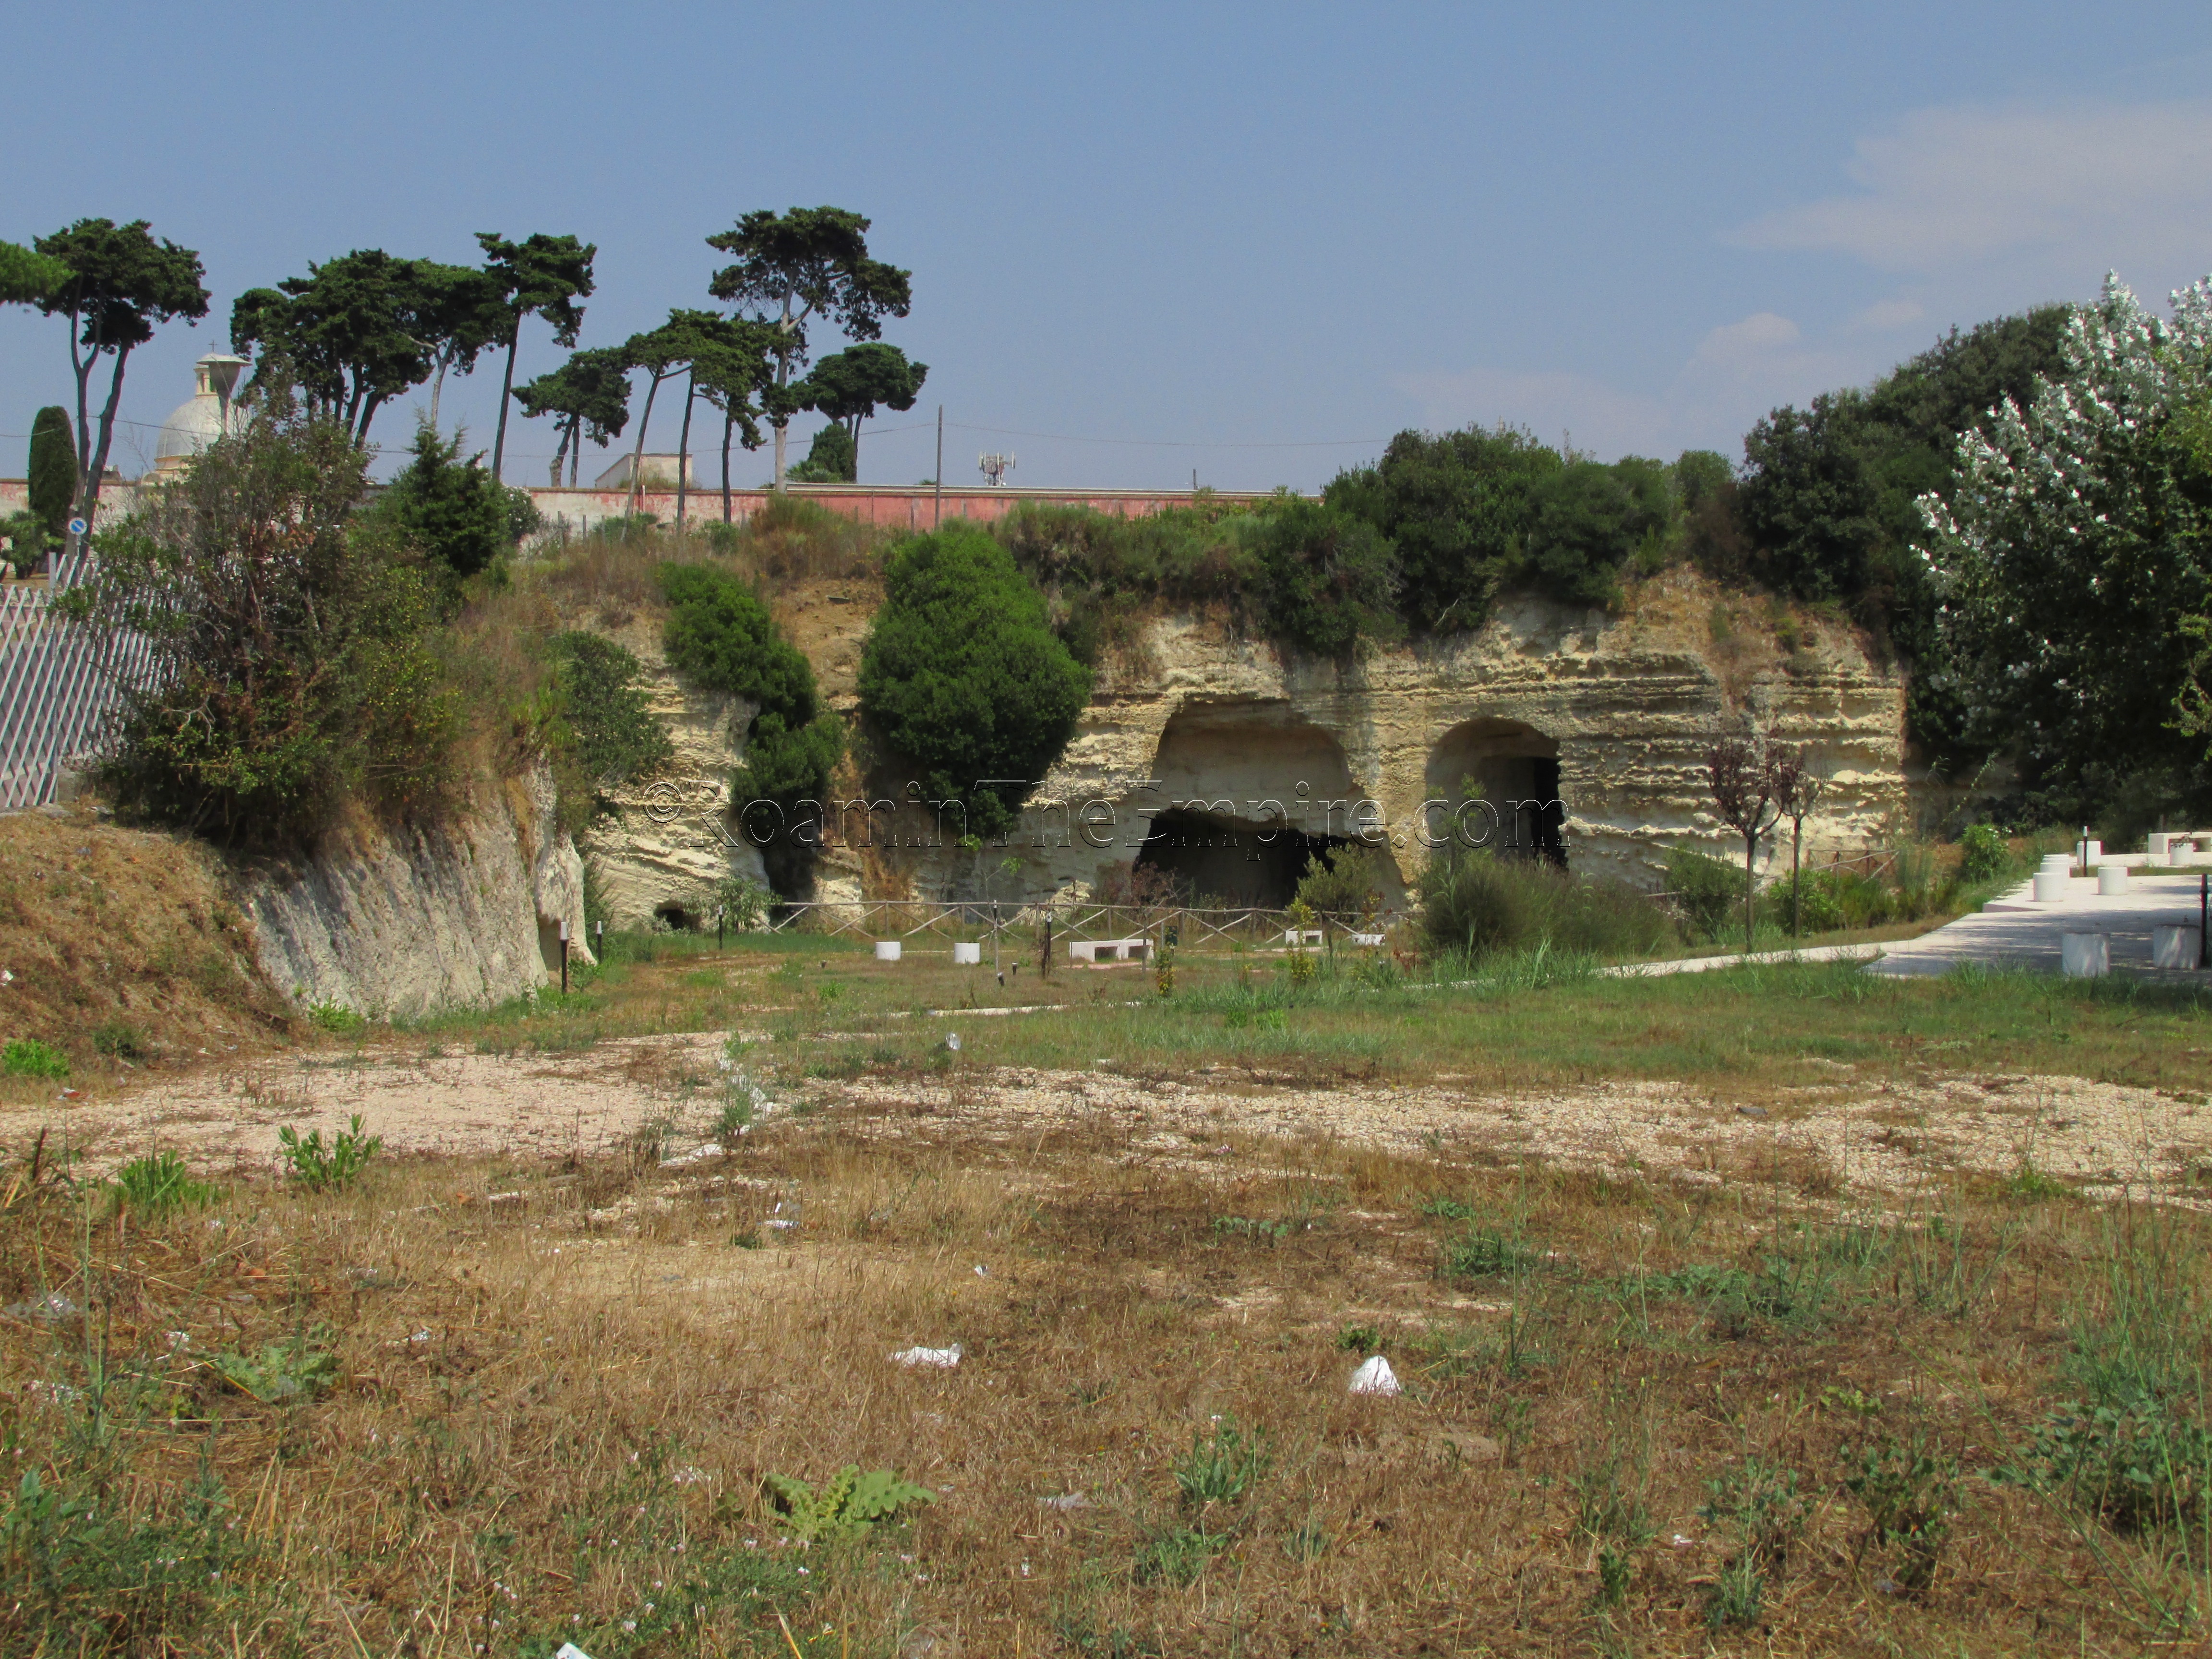 Pre-Roman defensive earthworks.